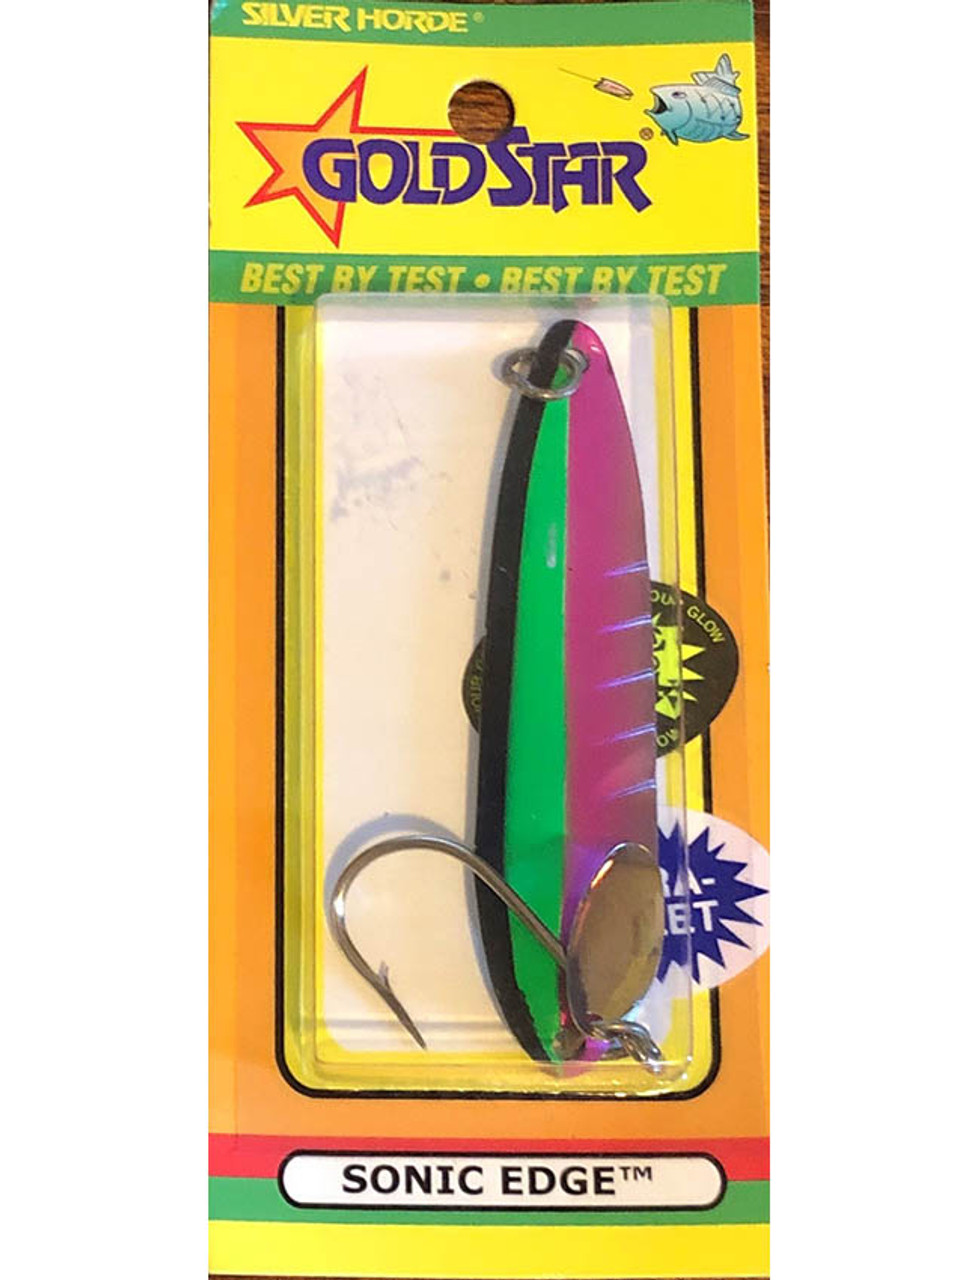 Goldstar Silver Horde Coho Killer Fishing Lure UV Glow Choice of